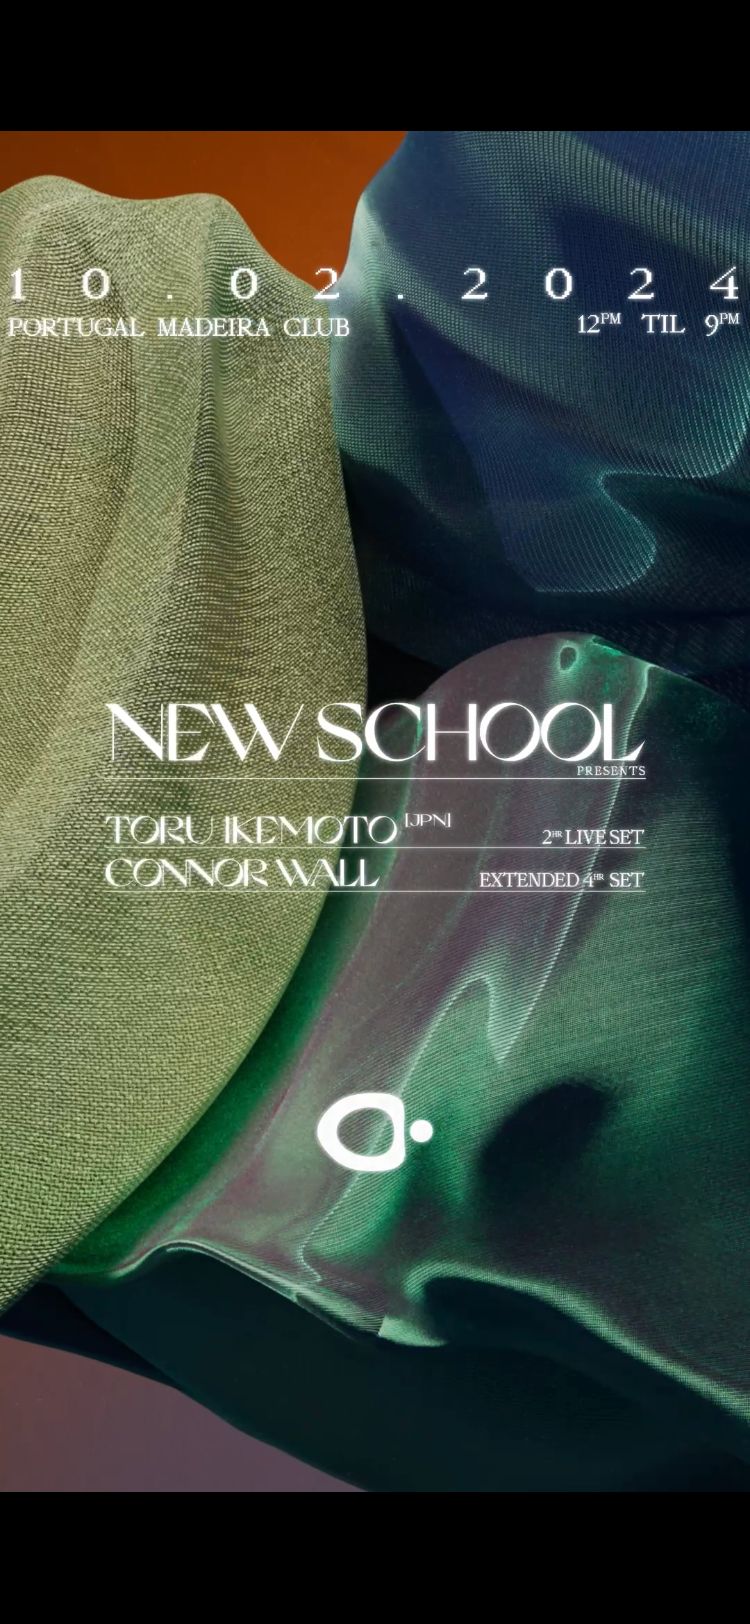 New School presents: Toru Ikemoto & Connor Wall - フライヤー表